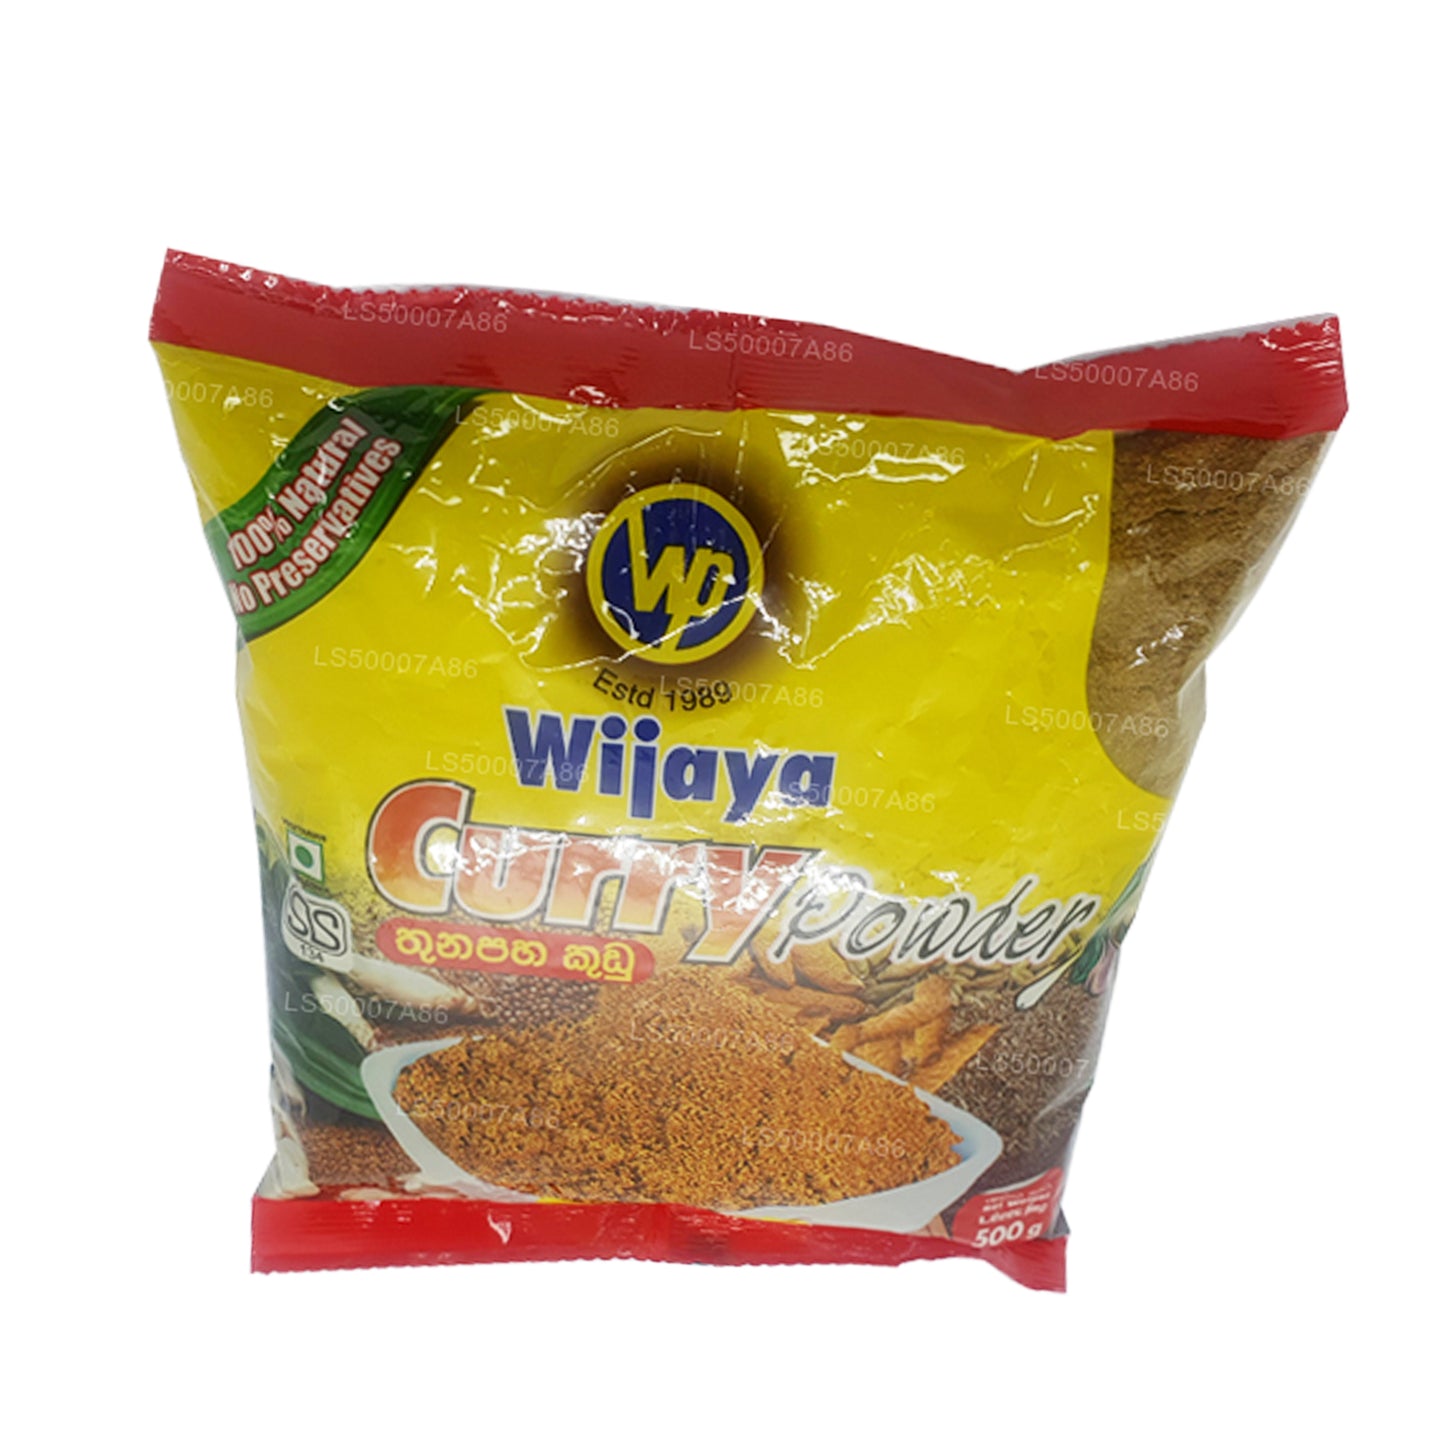 Wijaya Curry Pulver (500g)